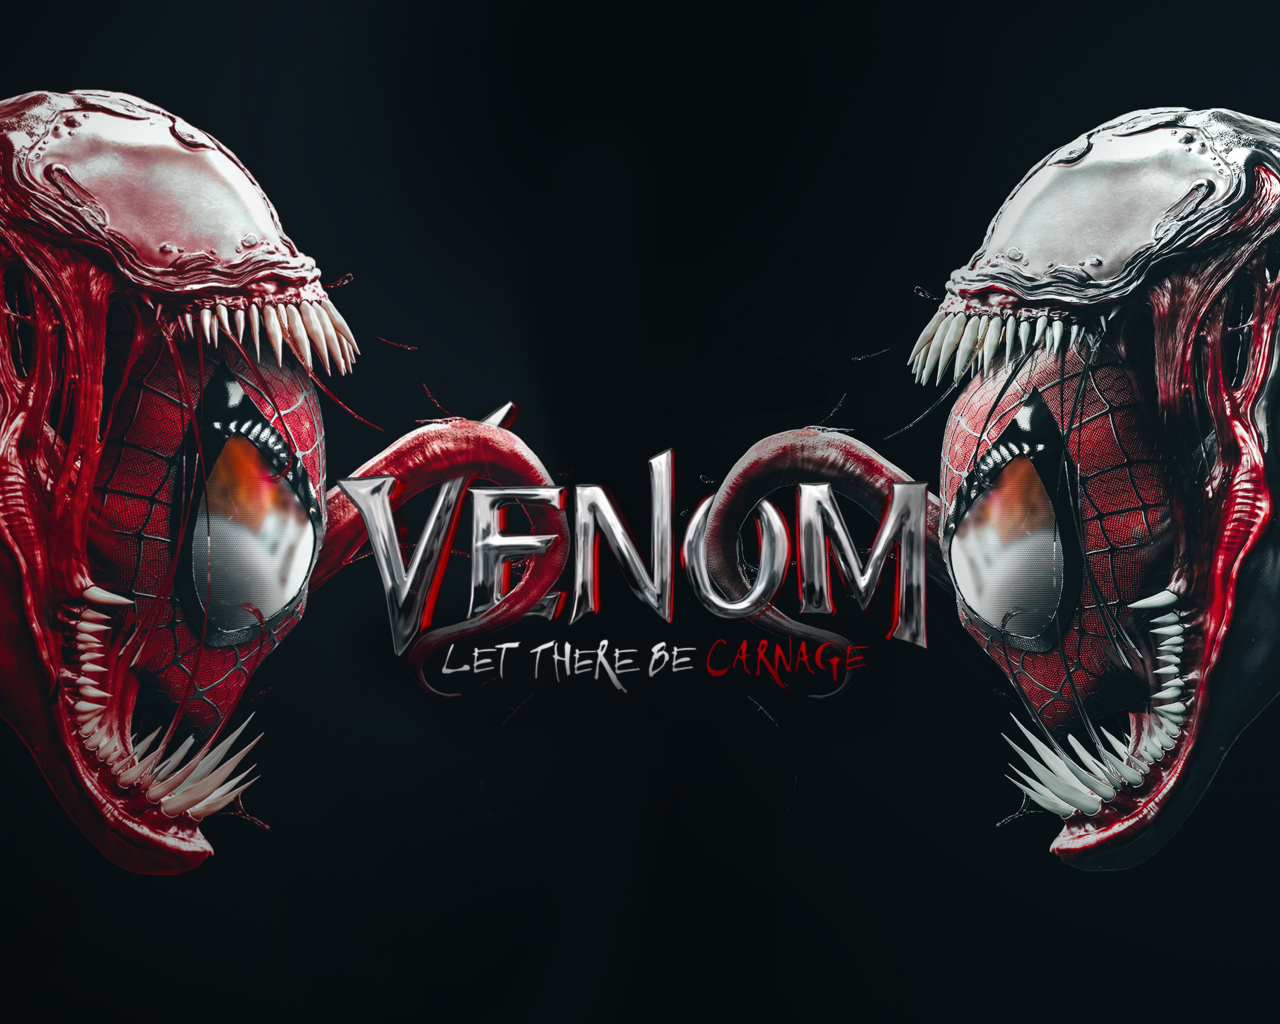 Venom 2 new movie poster, 2021